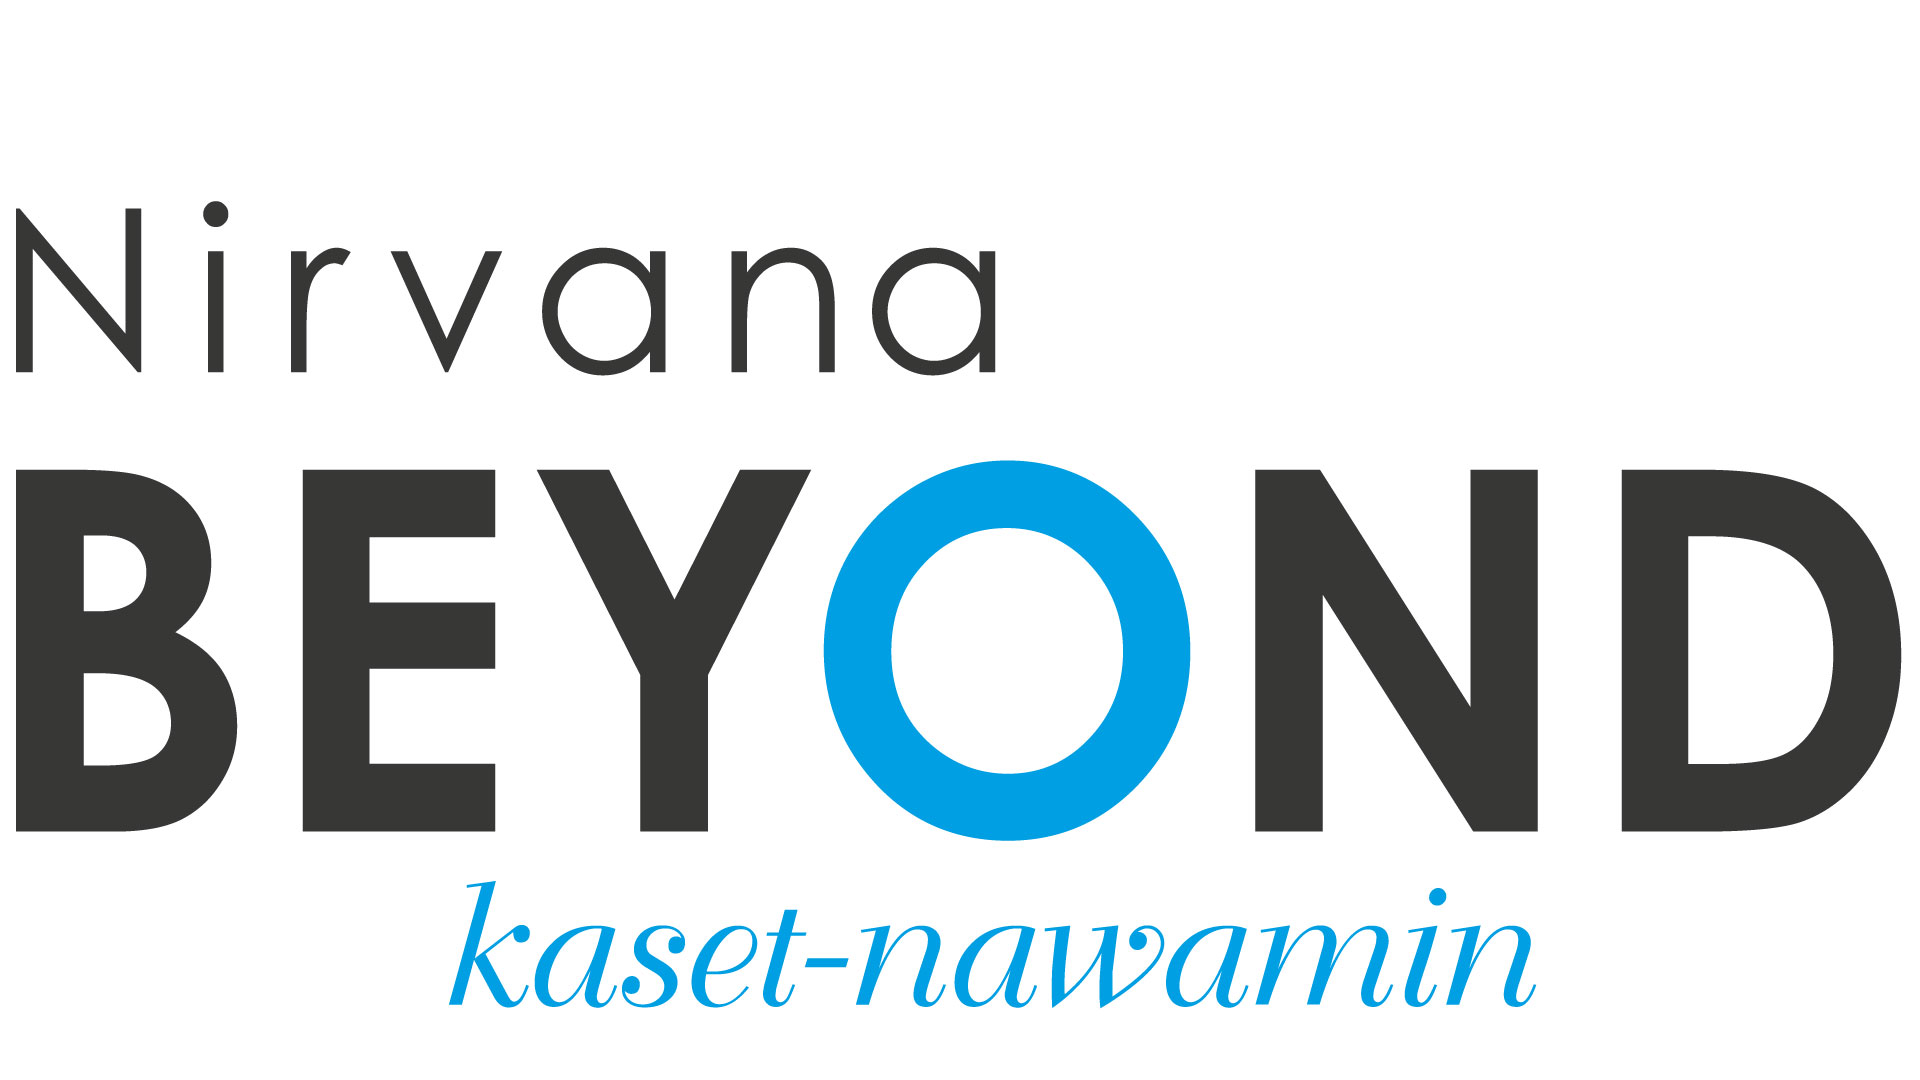 Nirvana BEYOND-Nirvana BEYOND Kaset-nawamin Logo